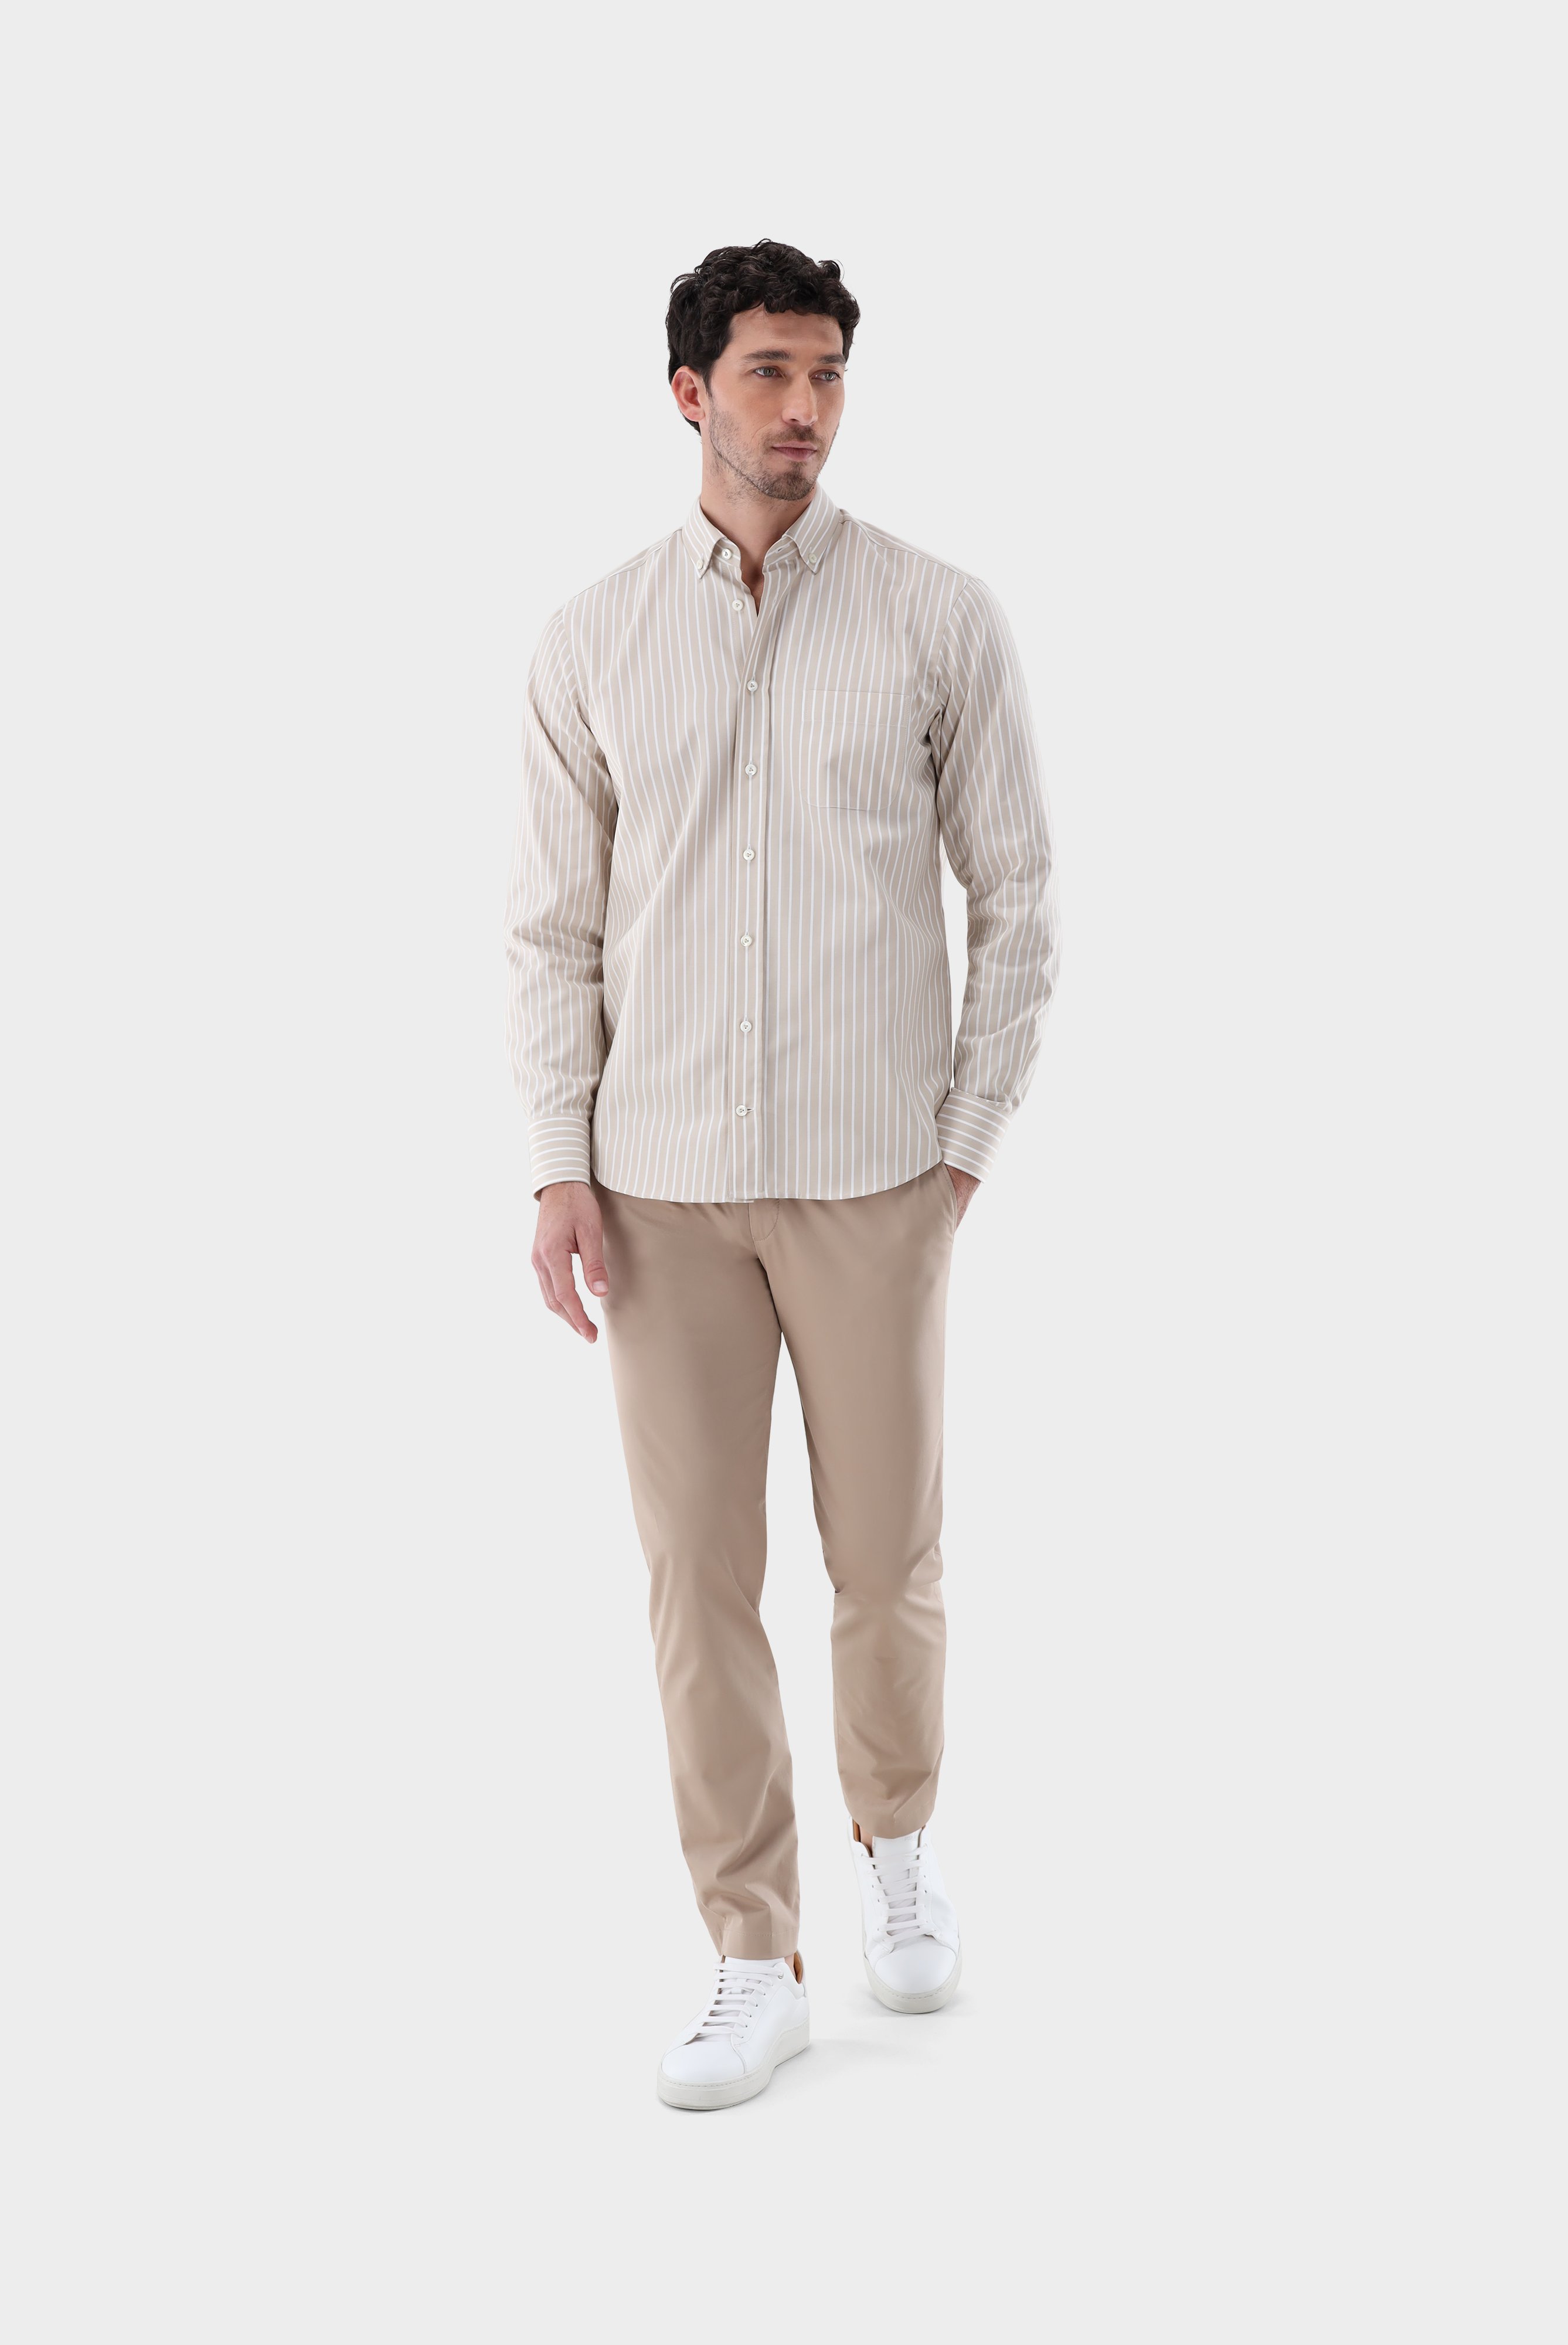 Casual Shirts+Striped Oxford Shirt Comfort Fit+20.2026.AV.151956.120.39